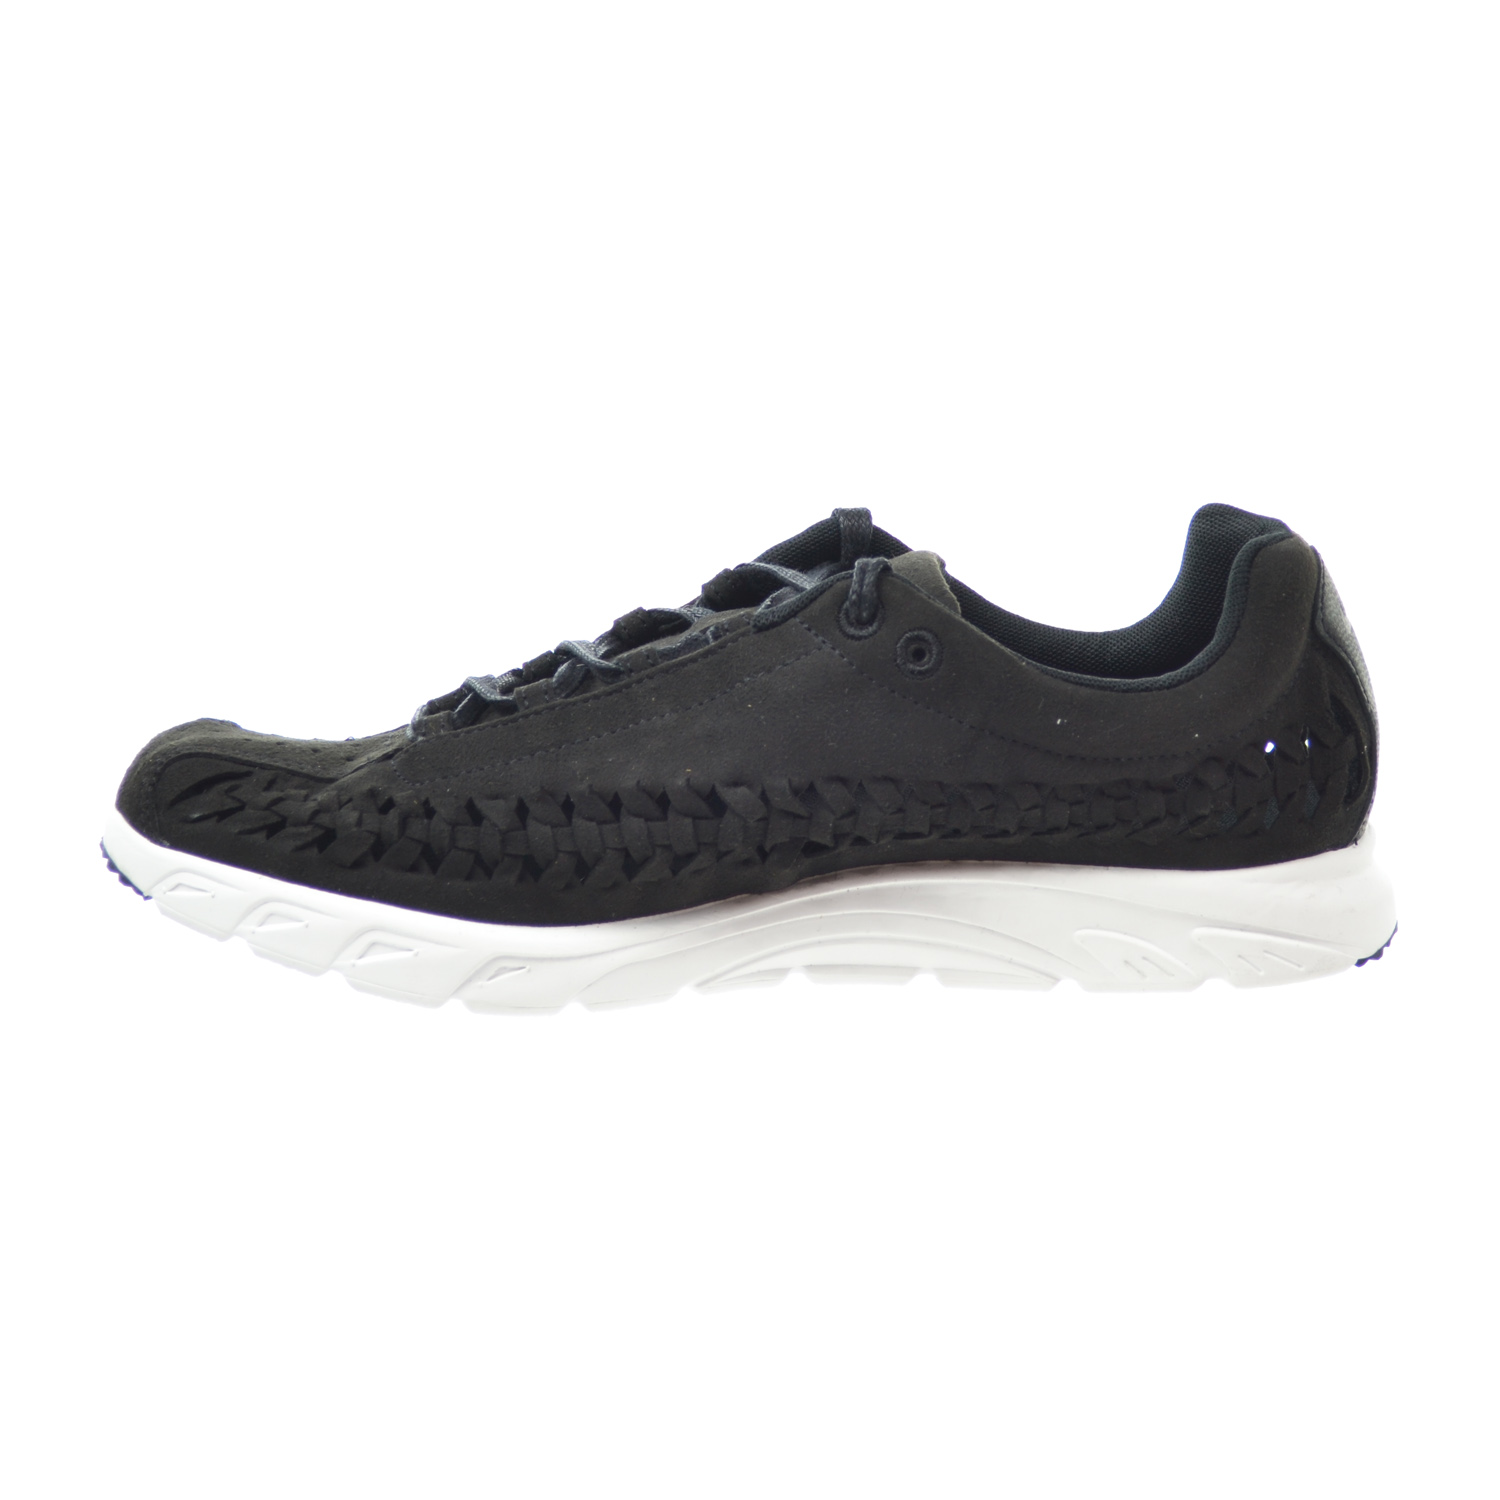 Nike Mayfly Woven Men's Shoes Black/Summit White 833132-001 (10 D(M) US)